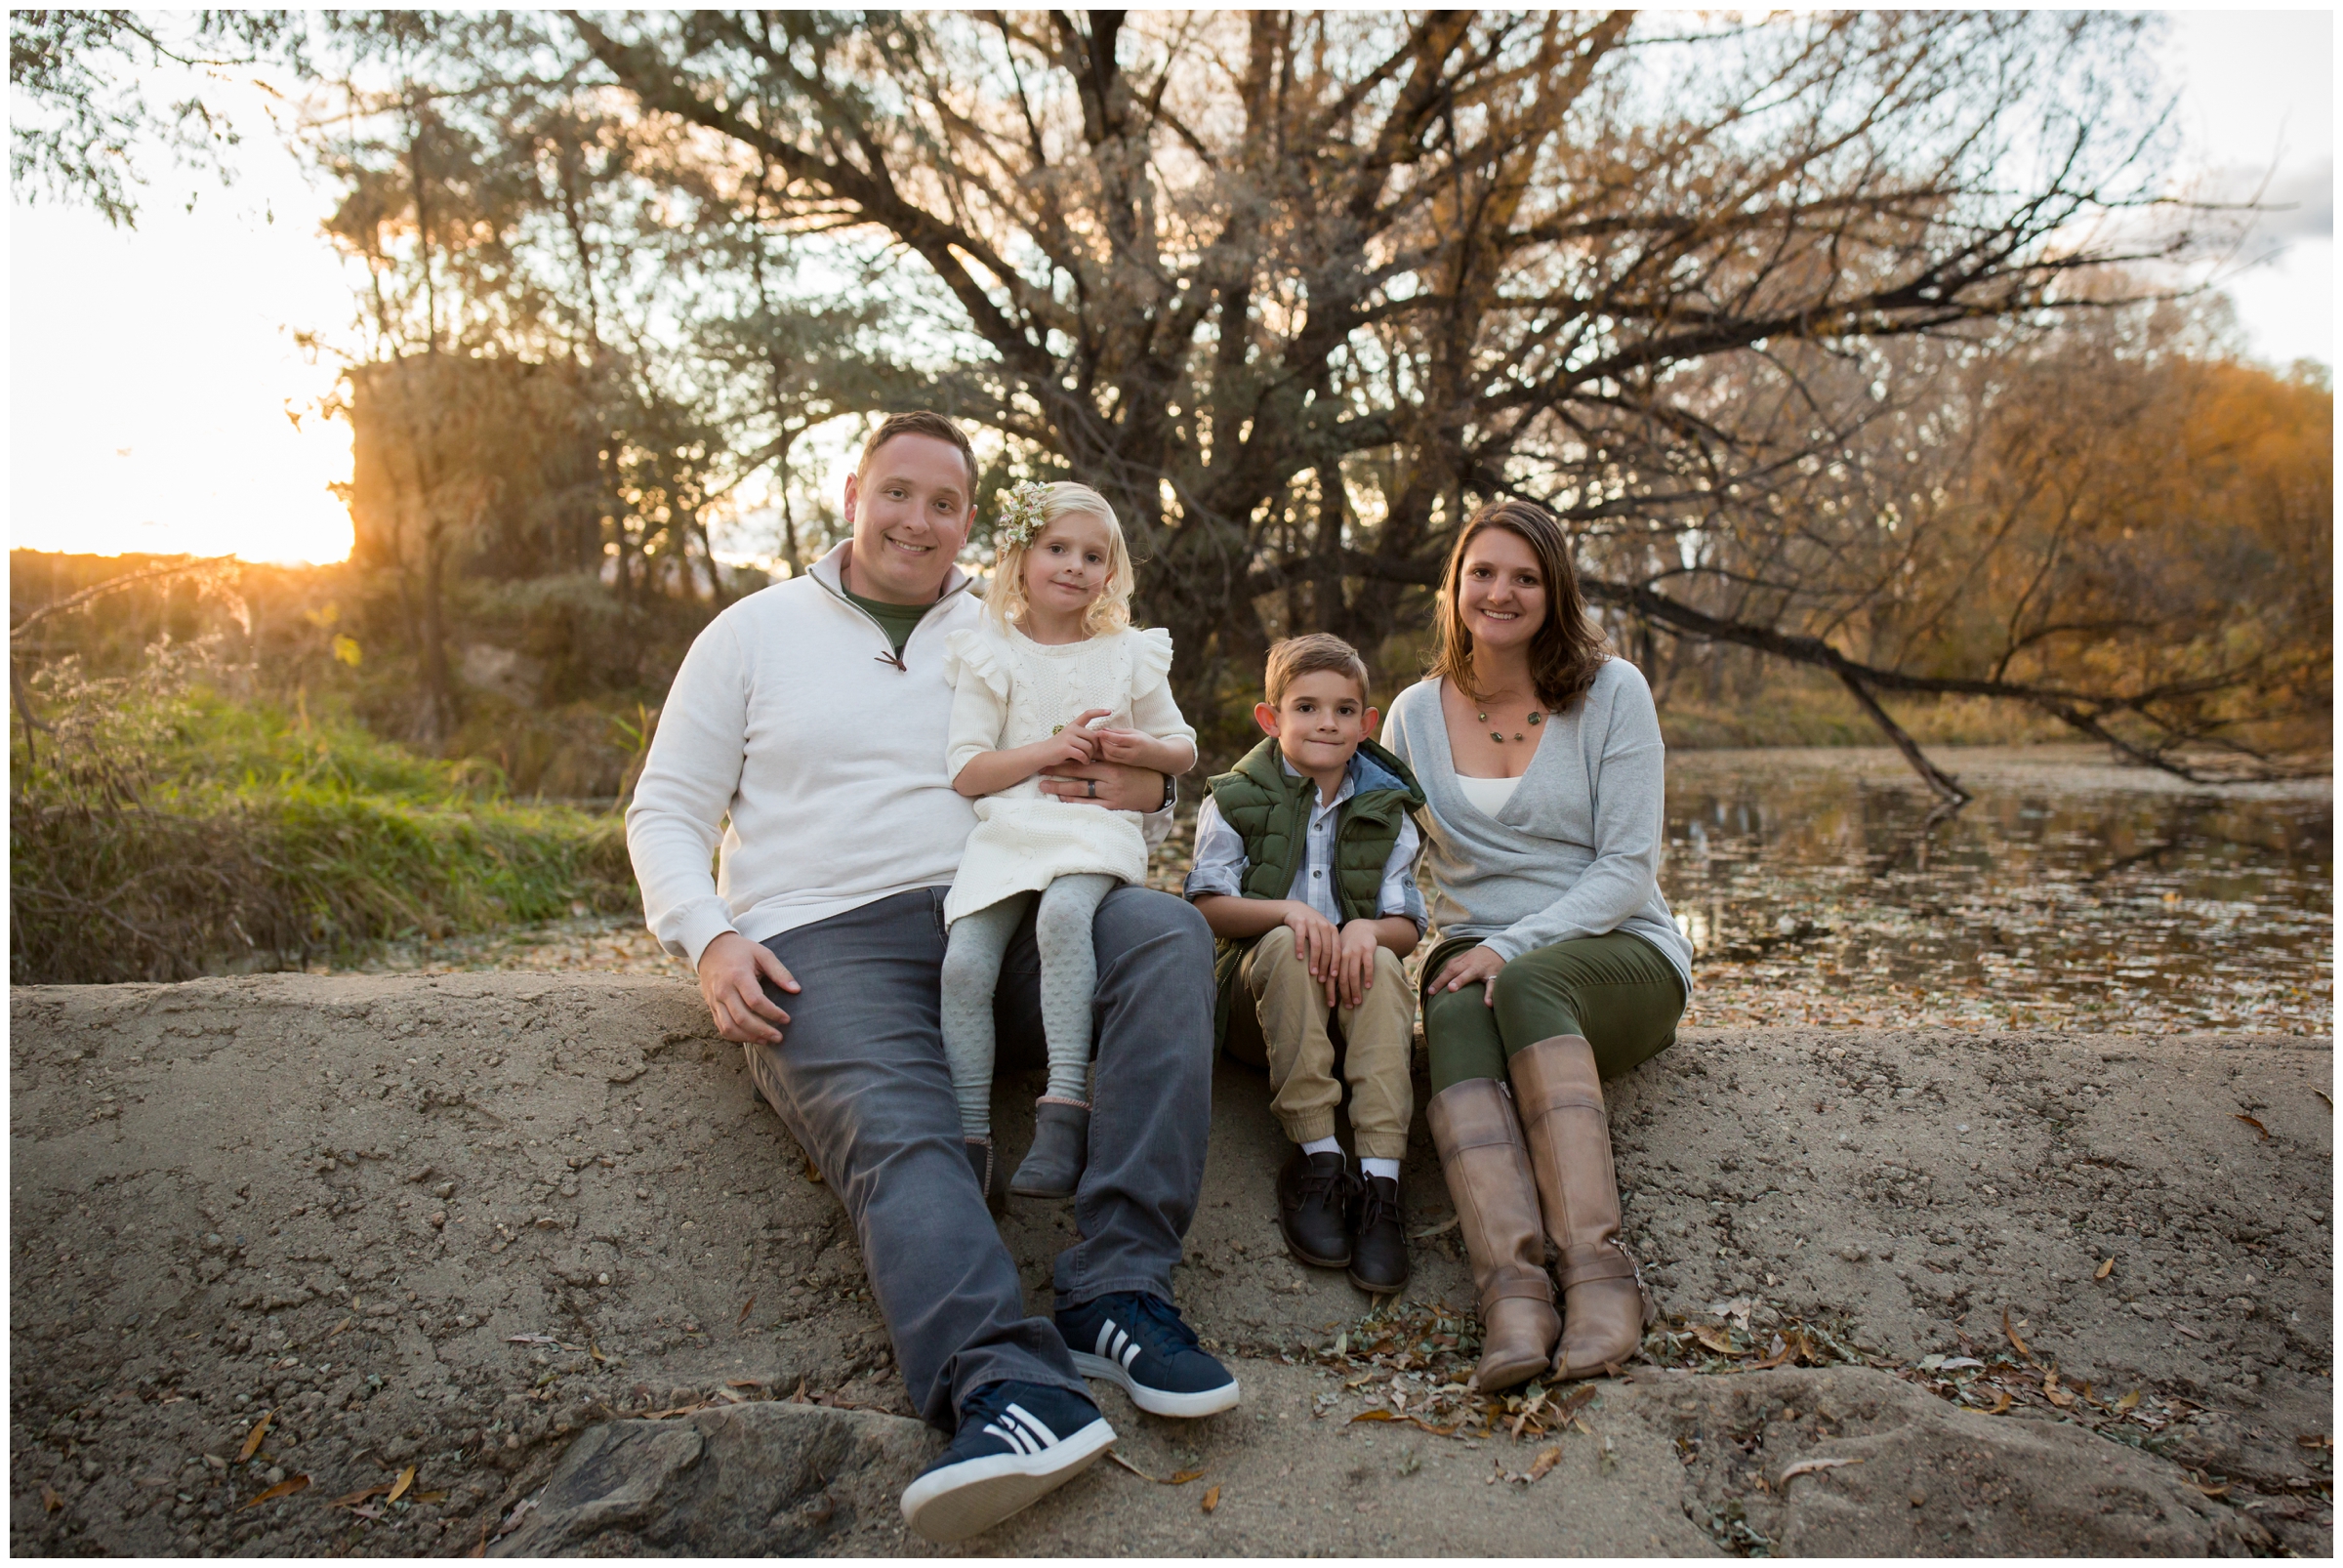 Longmont Colorado family photography at Golden ponds nature area by portrait photographer Plum Pretty Photography